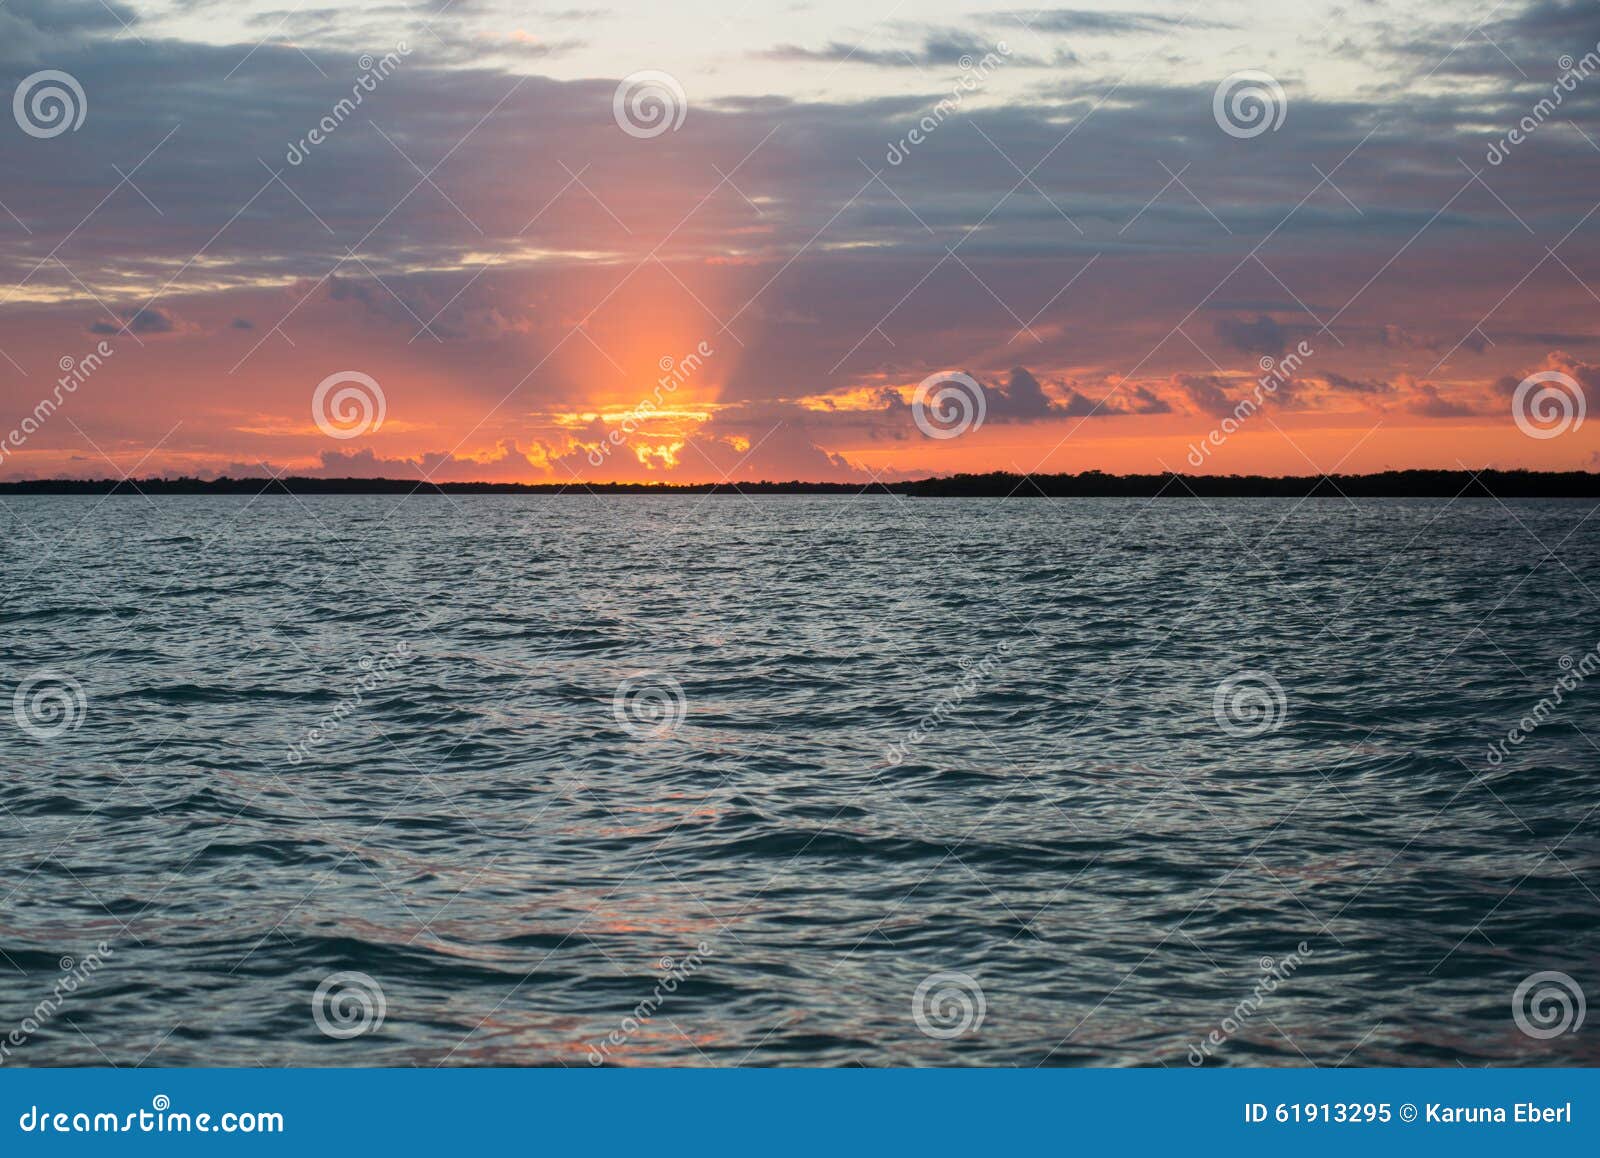 Last Light stock image. Image of gulf, tropical, sunset - 61913295